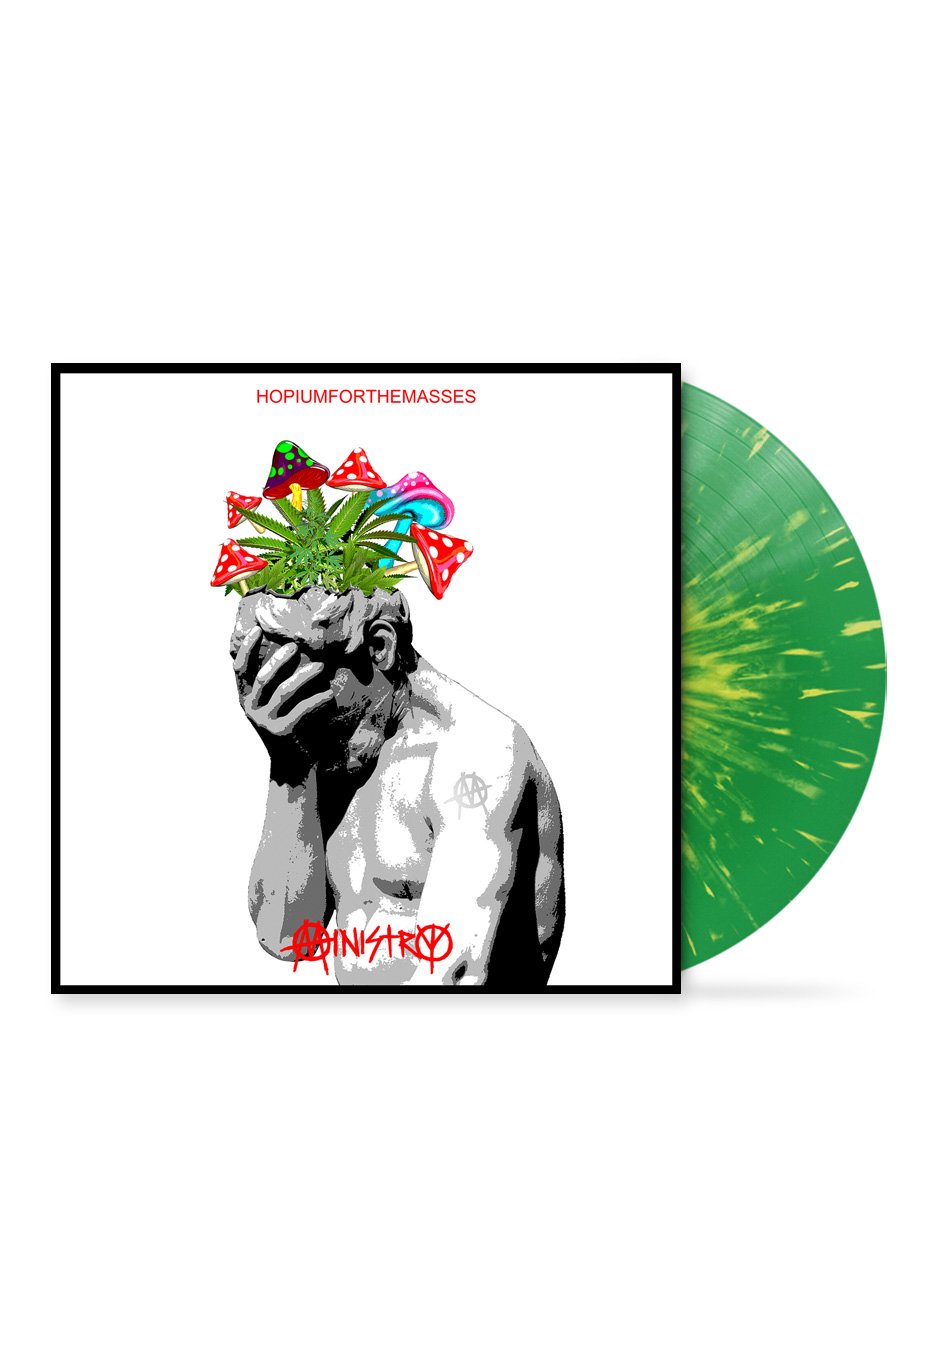 Ministry - Hopiumforthemasses Ltd. Green w/ Yellow - Splattered Vinyl